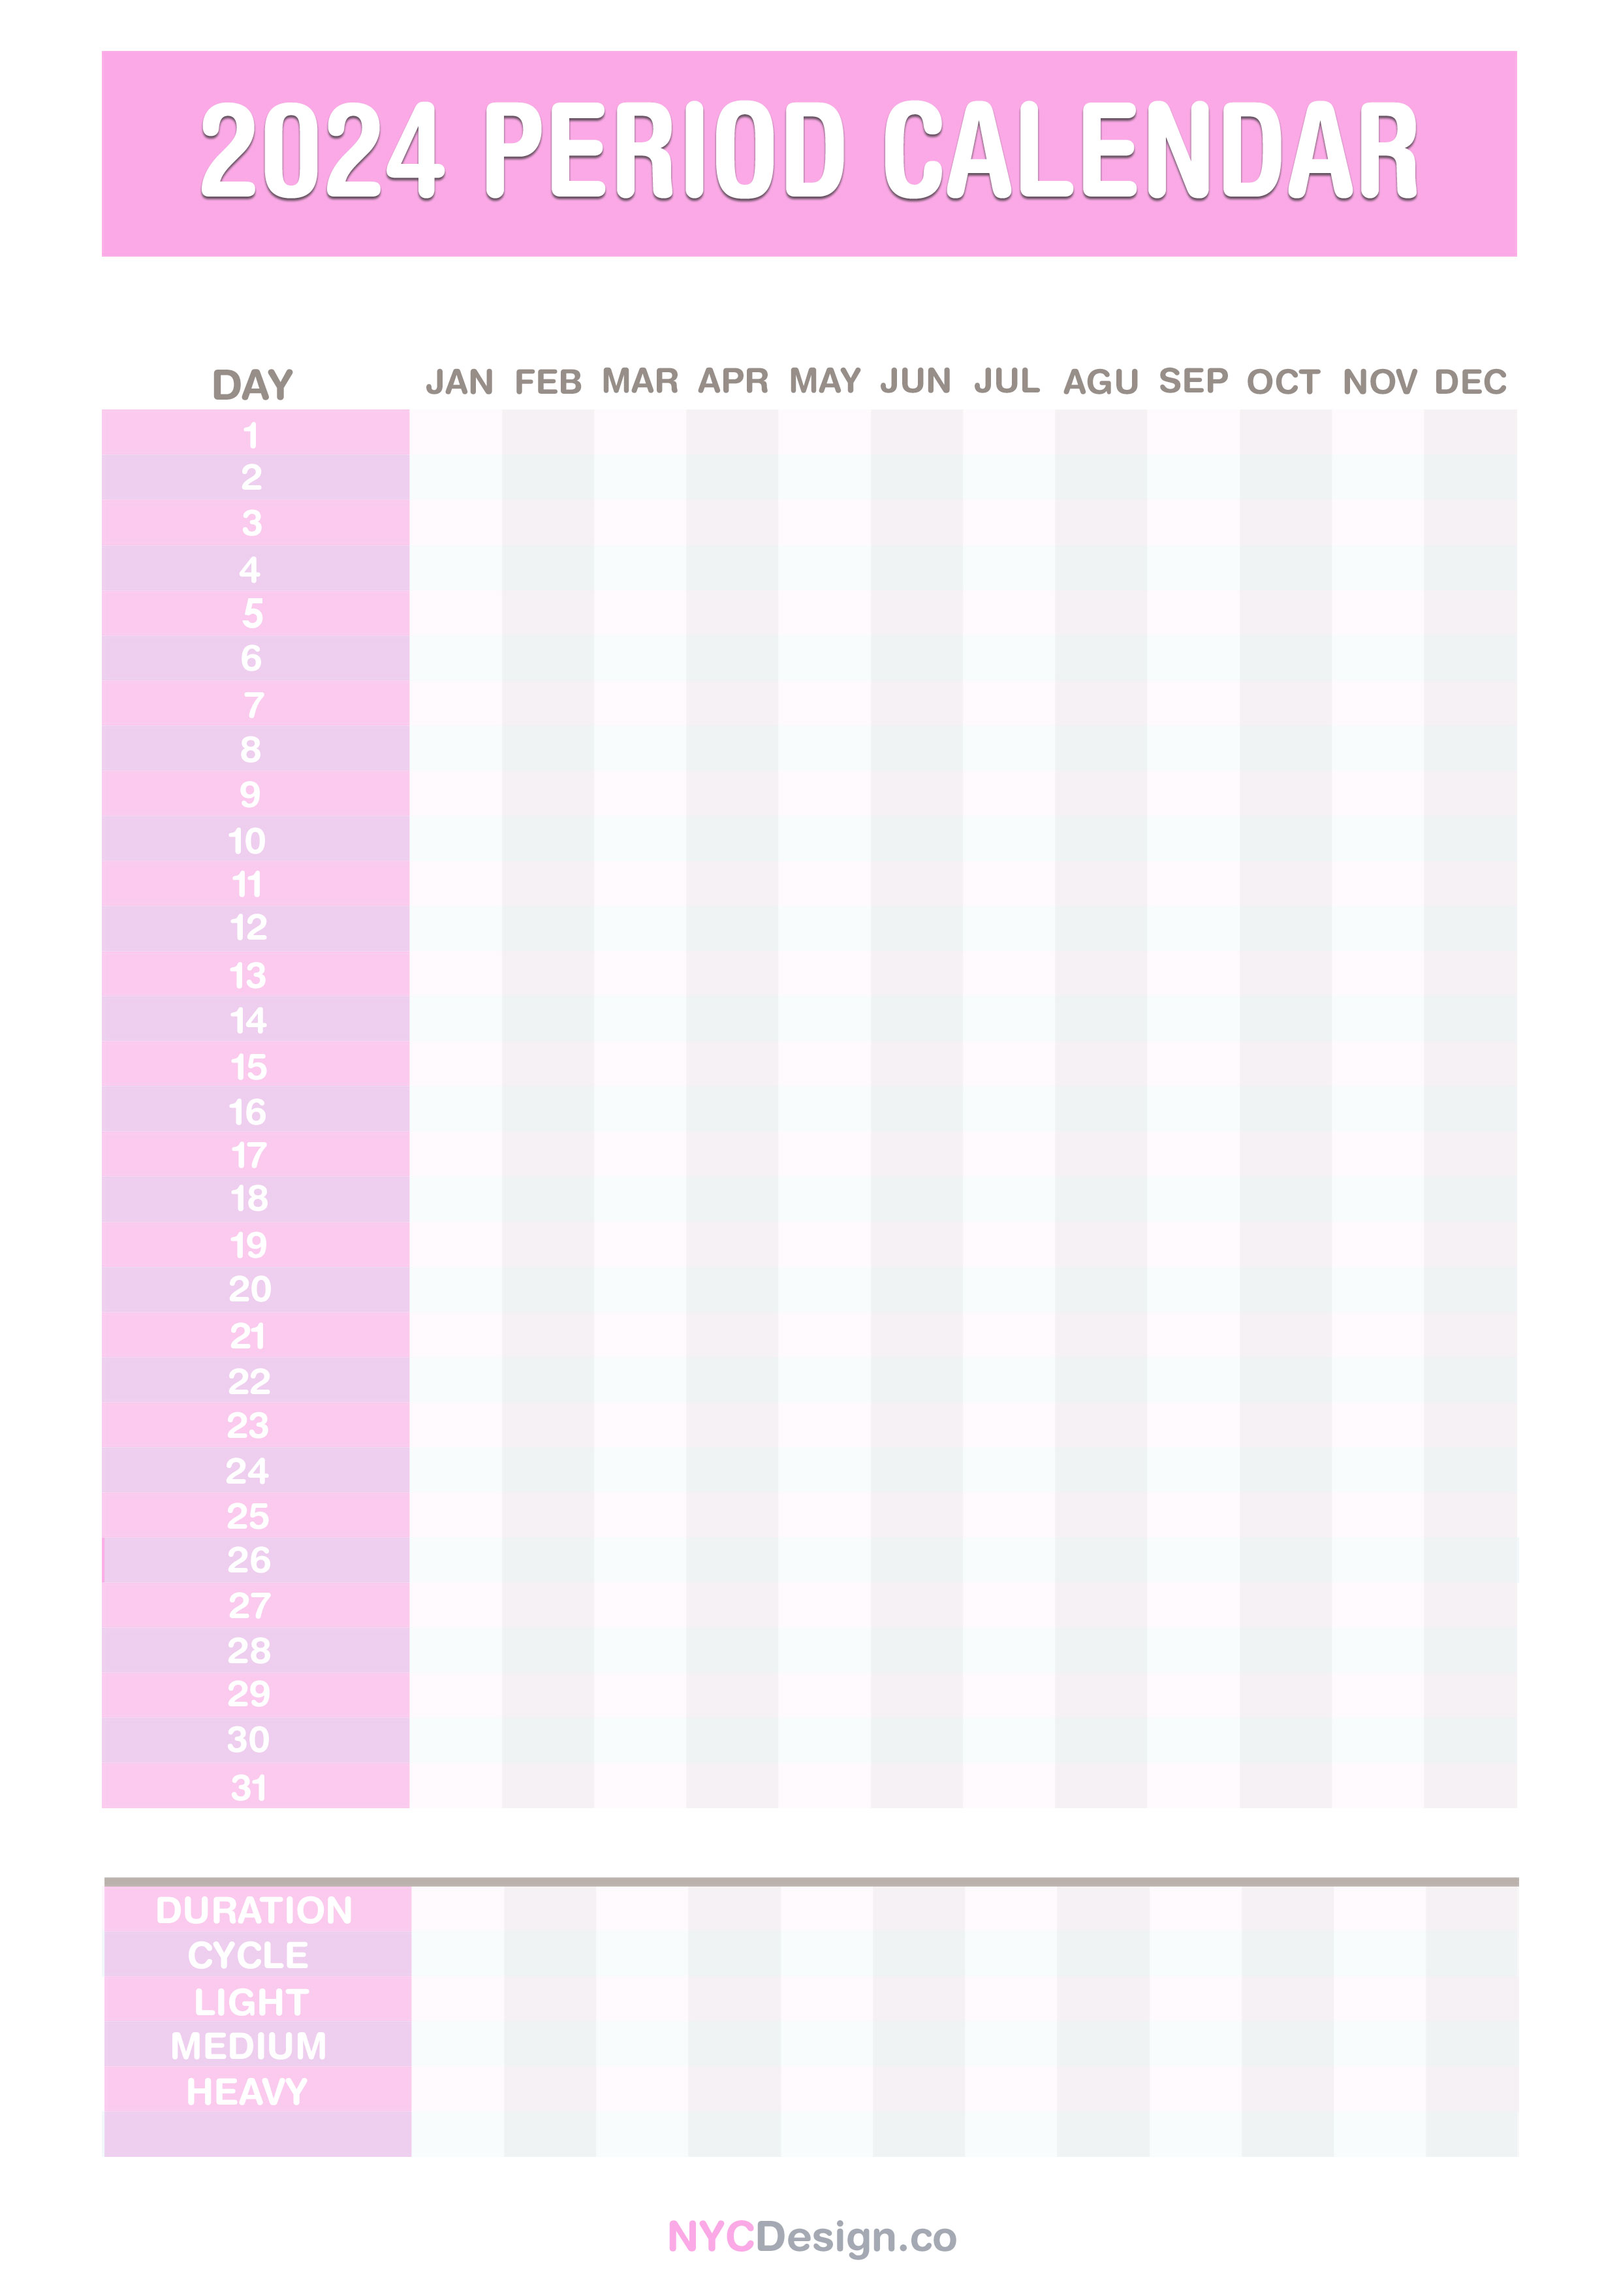 2024 Period Calendar, Printable, Free Pink NYCDesign.co Printable